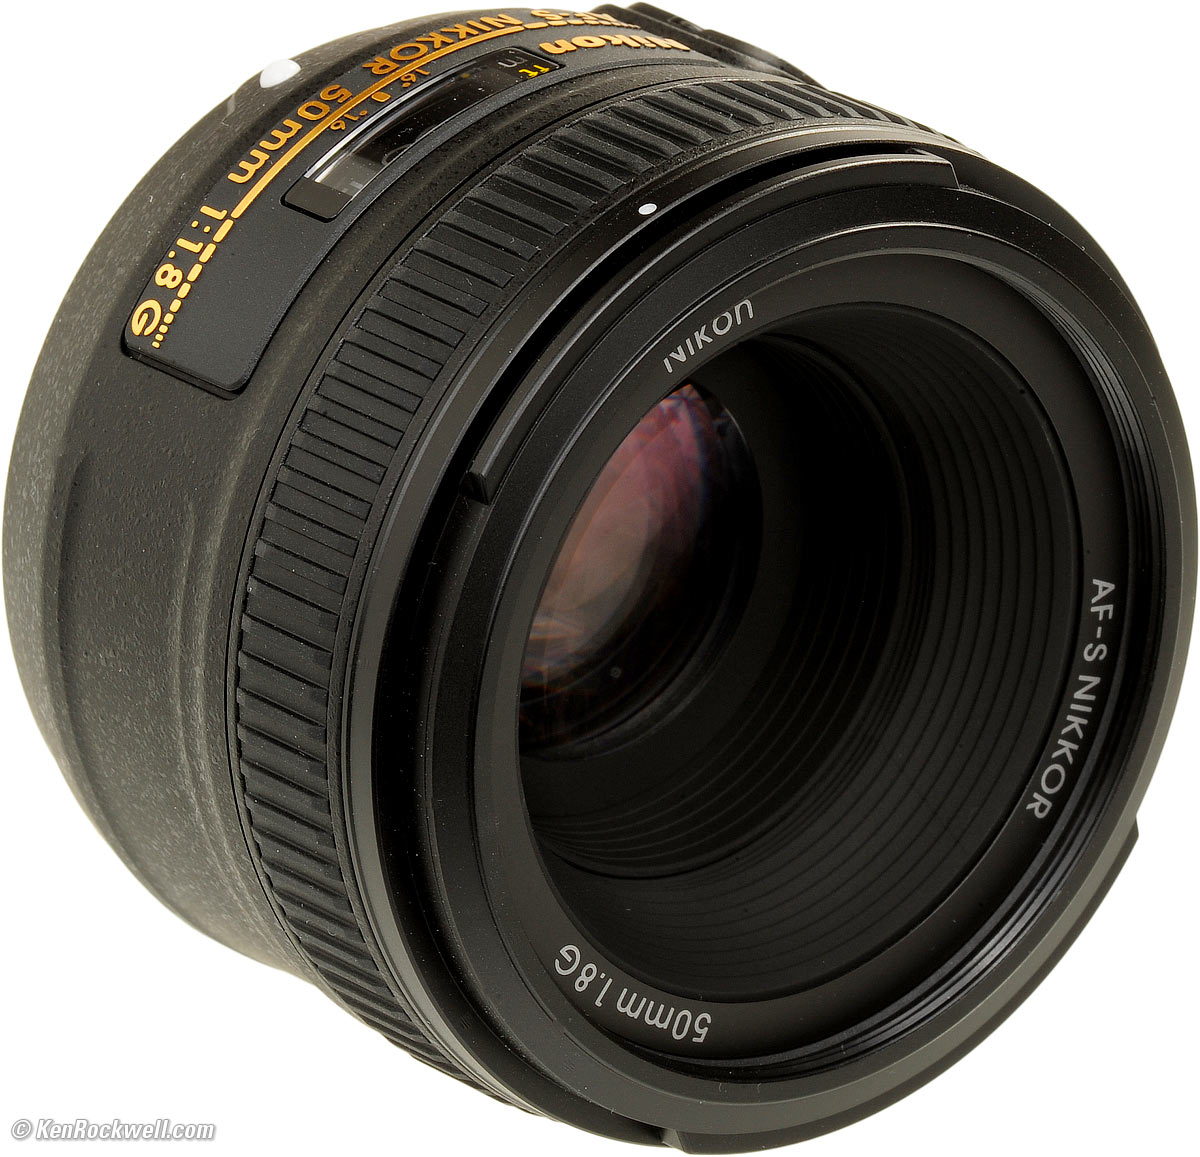 Editing Software Bundle Nikon AF-S FX NIKKOR 50mm f/1.8G Prime Lens with Auto Focus for Nikon F-Mount DSLR Cameras Premium Accessory Set with 58mm Wide Angle & Telephoto Lens Filter Kit 